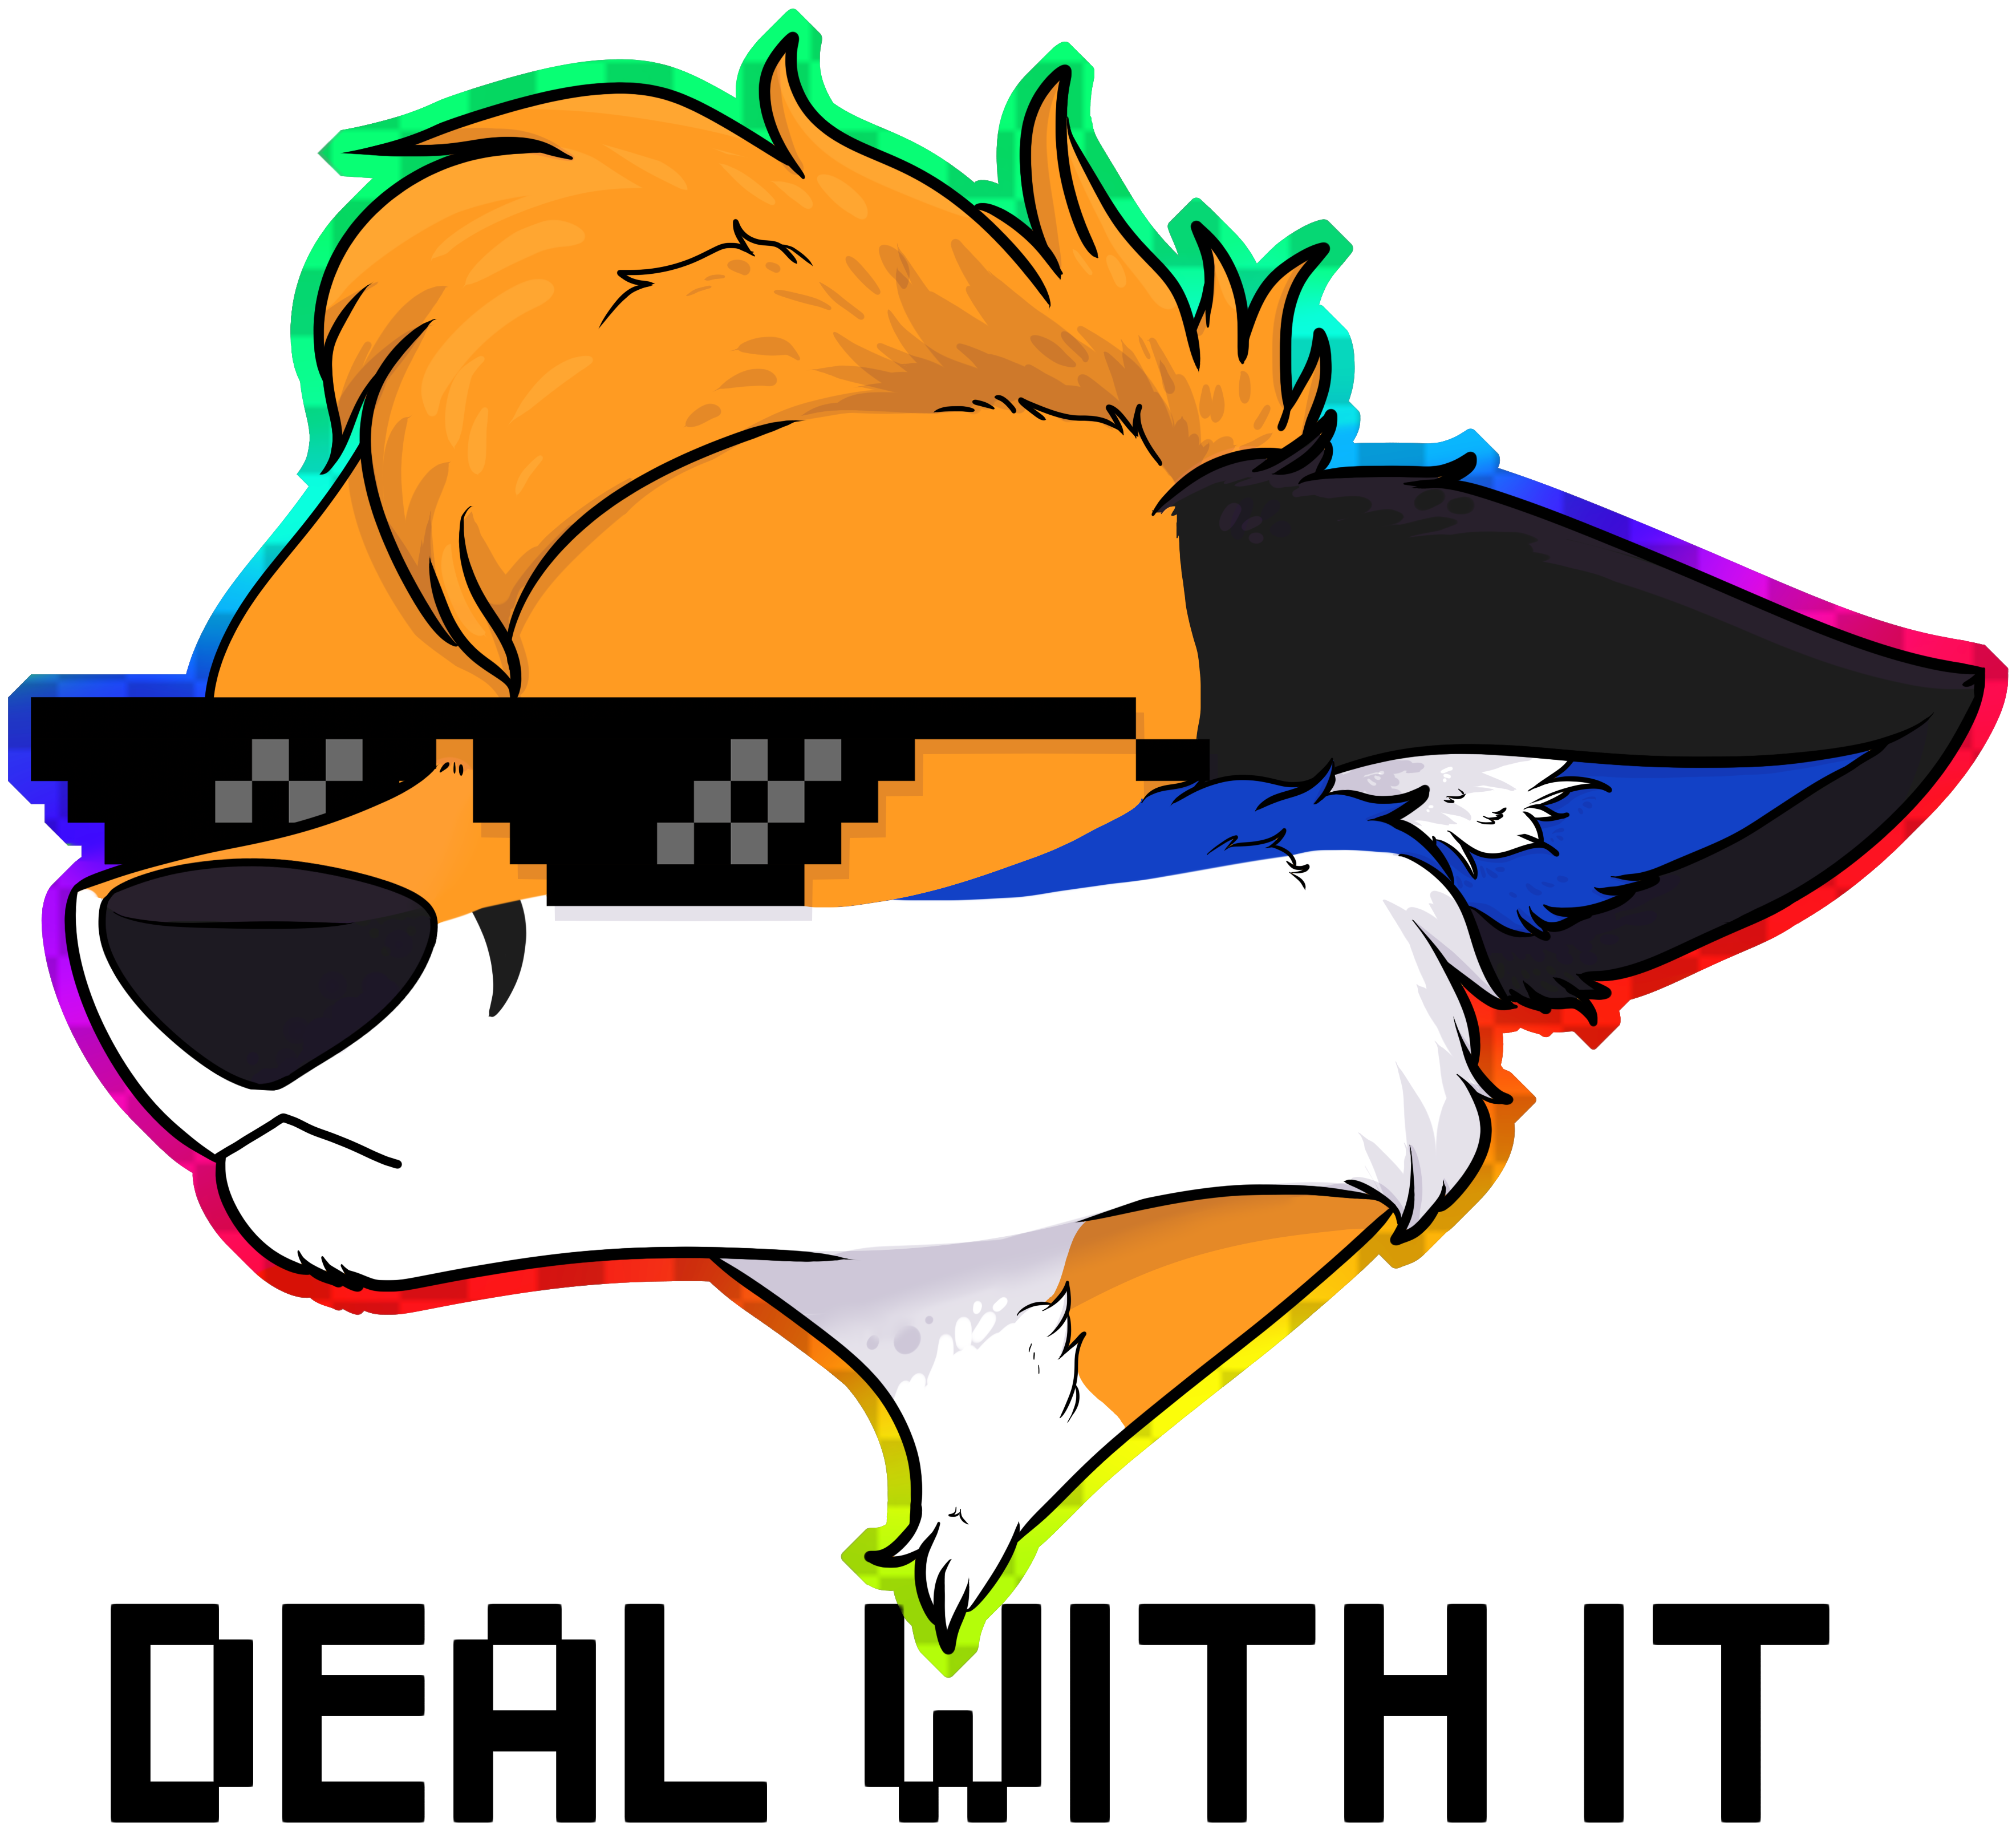 A Cartoon Of A Fox Wearing Sunglasses